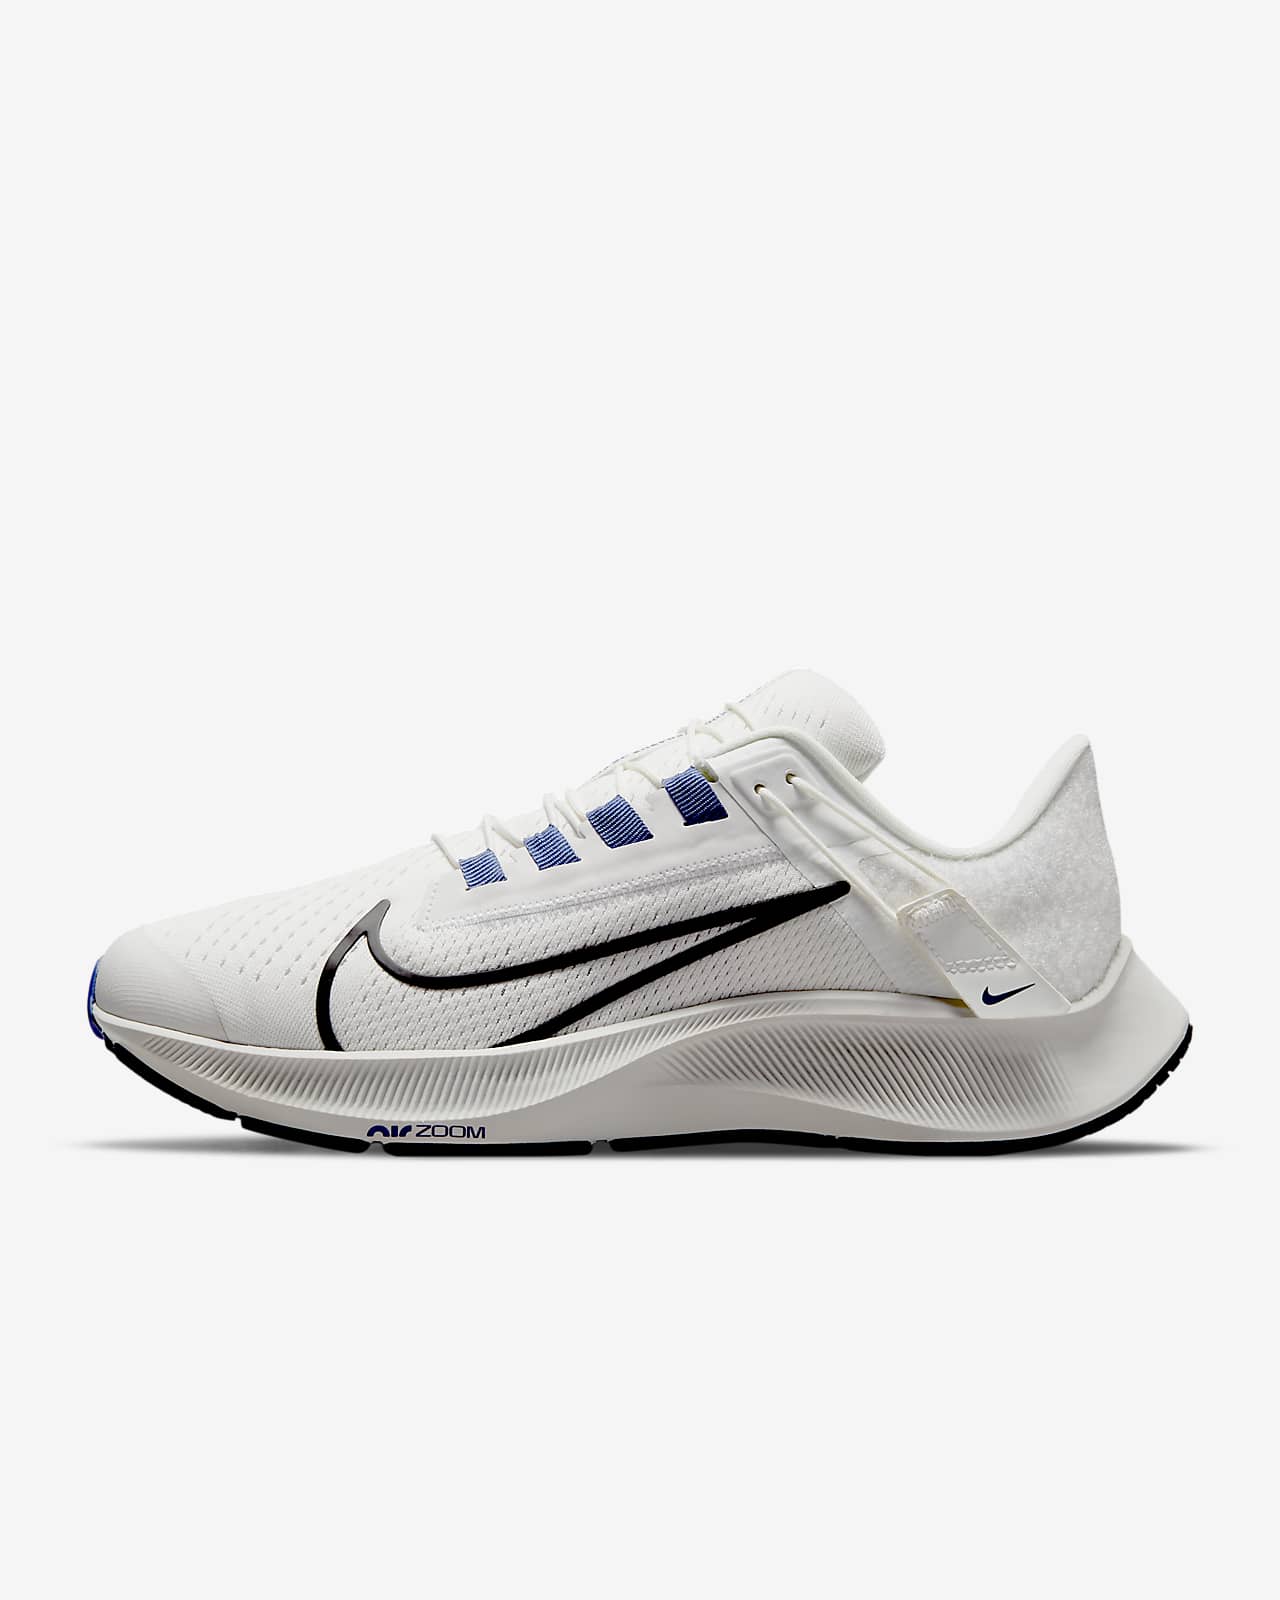 Pegasus 38 White : Nike Zoom Pegasus 38 Review Running Shoes Guru ...